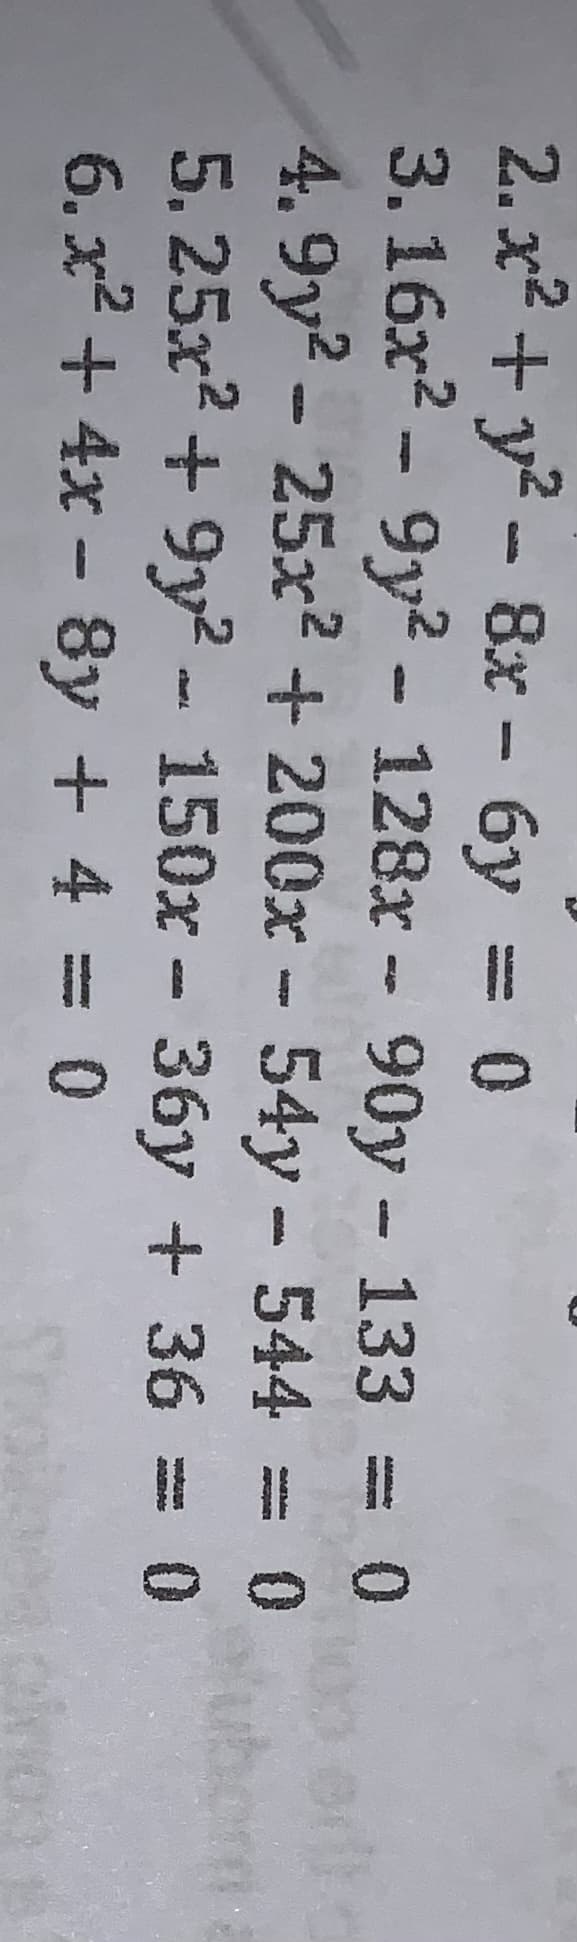 2. x2 + y² - 8x - 6y = 0
3. 16x2 - 9y2 - 128x - 90y - 133 = 0
4.9y² - 25x2 + 200x – 54y - 544 0
5. 25x2 + 9y? - 150x - 36y + 36 = 0
6. x² + 4x – 8y + 4 = 0
entoer
uborm
chat L
